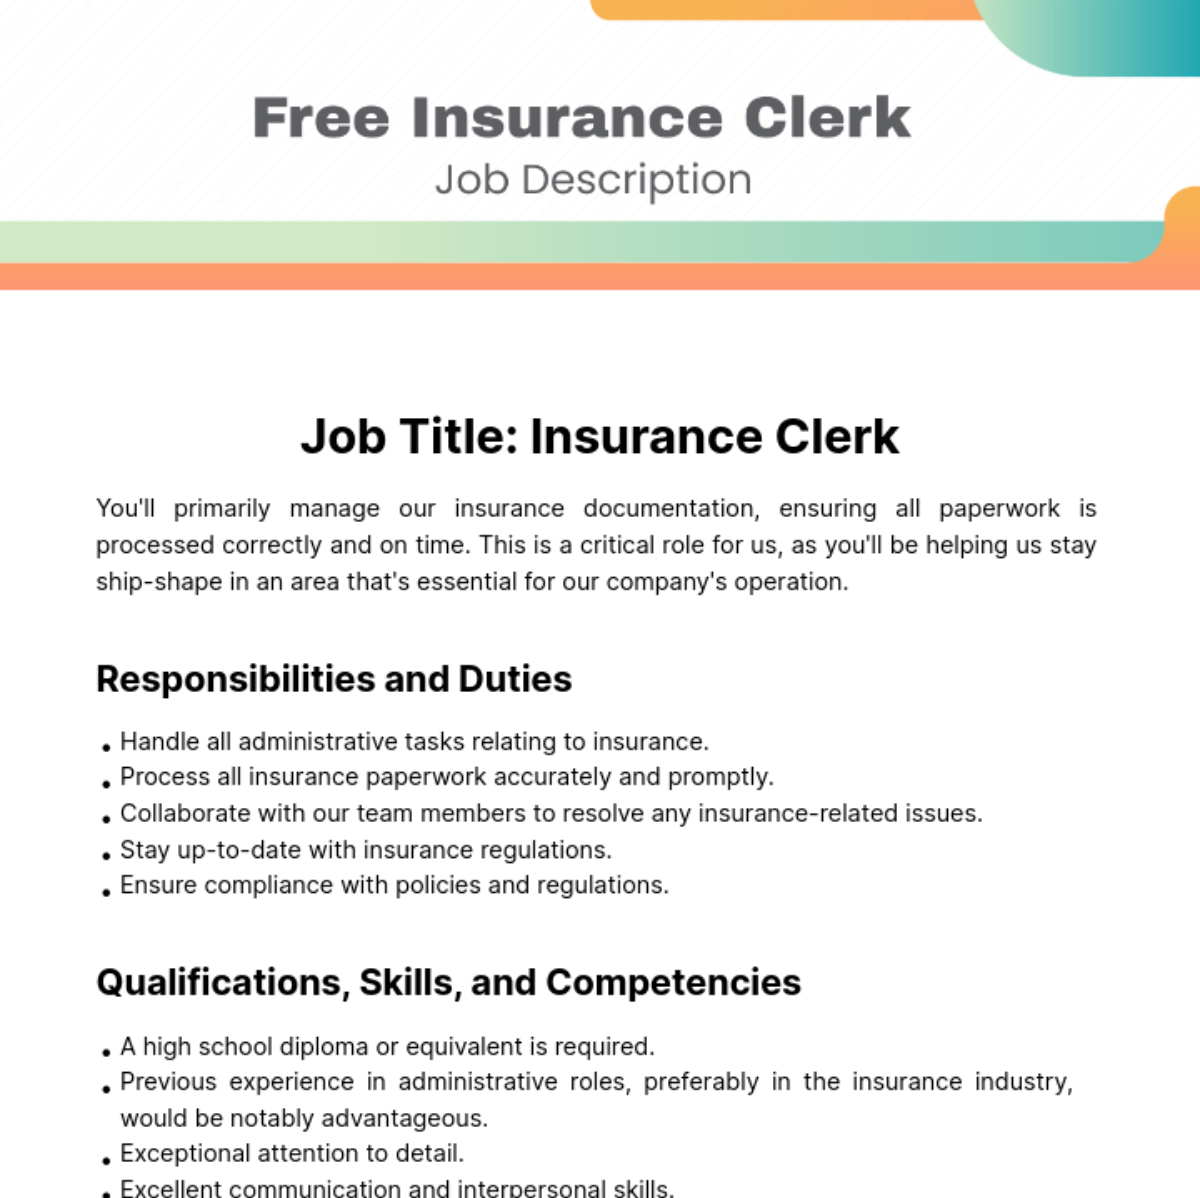 Free Insurance Clerk Job Description Template